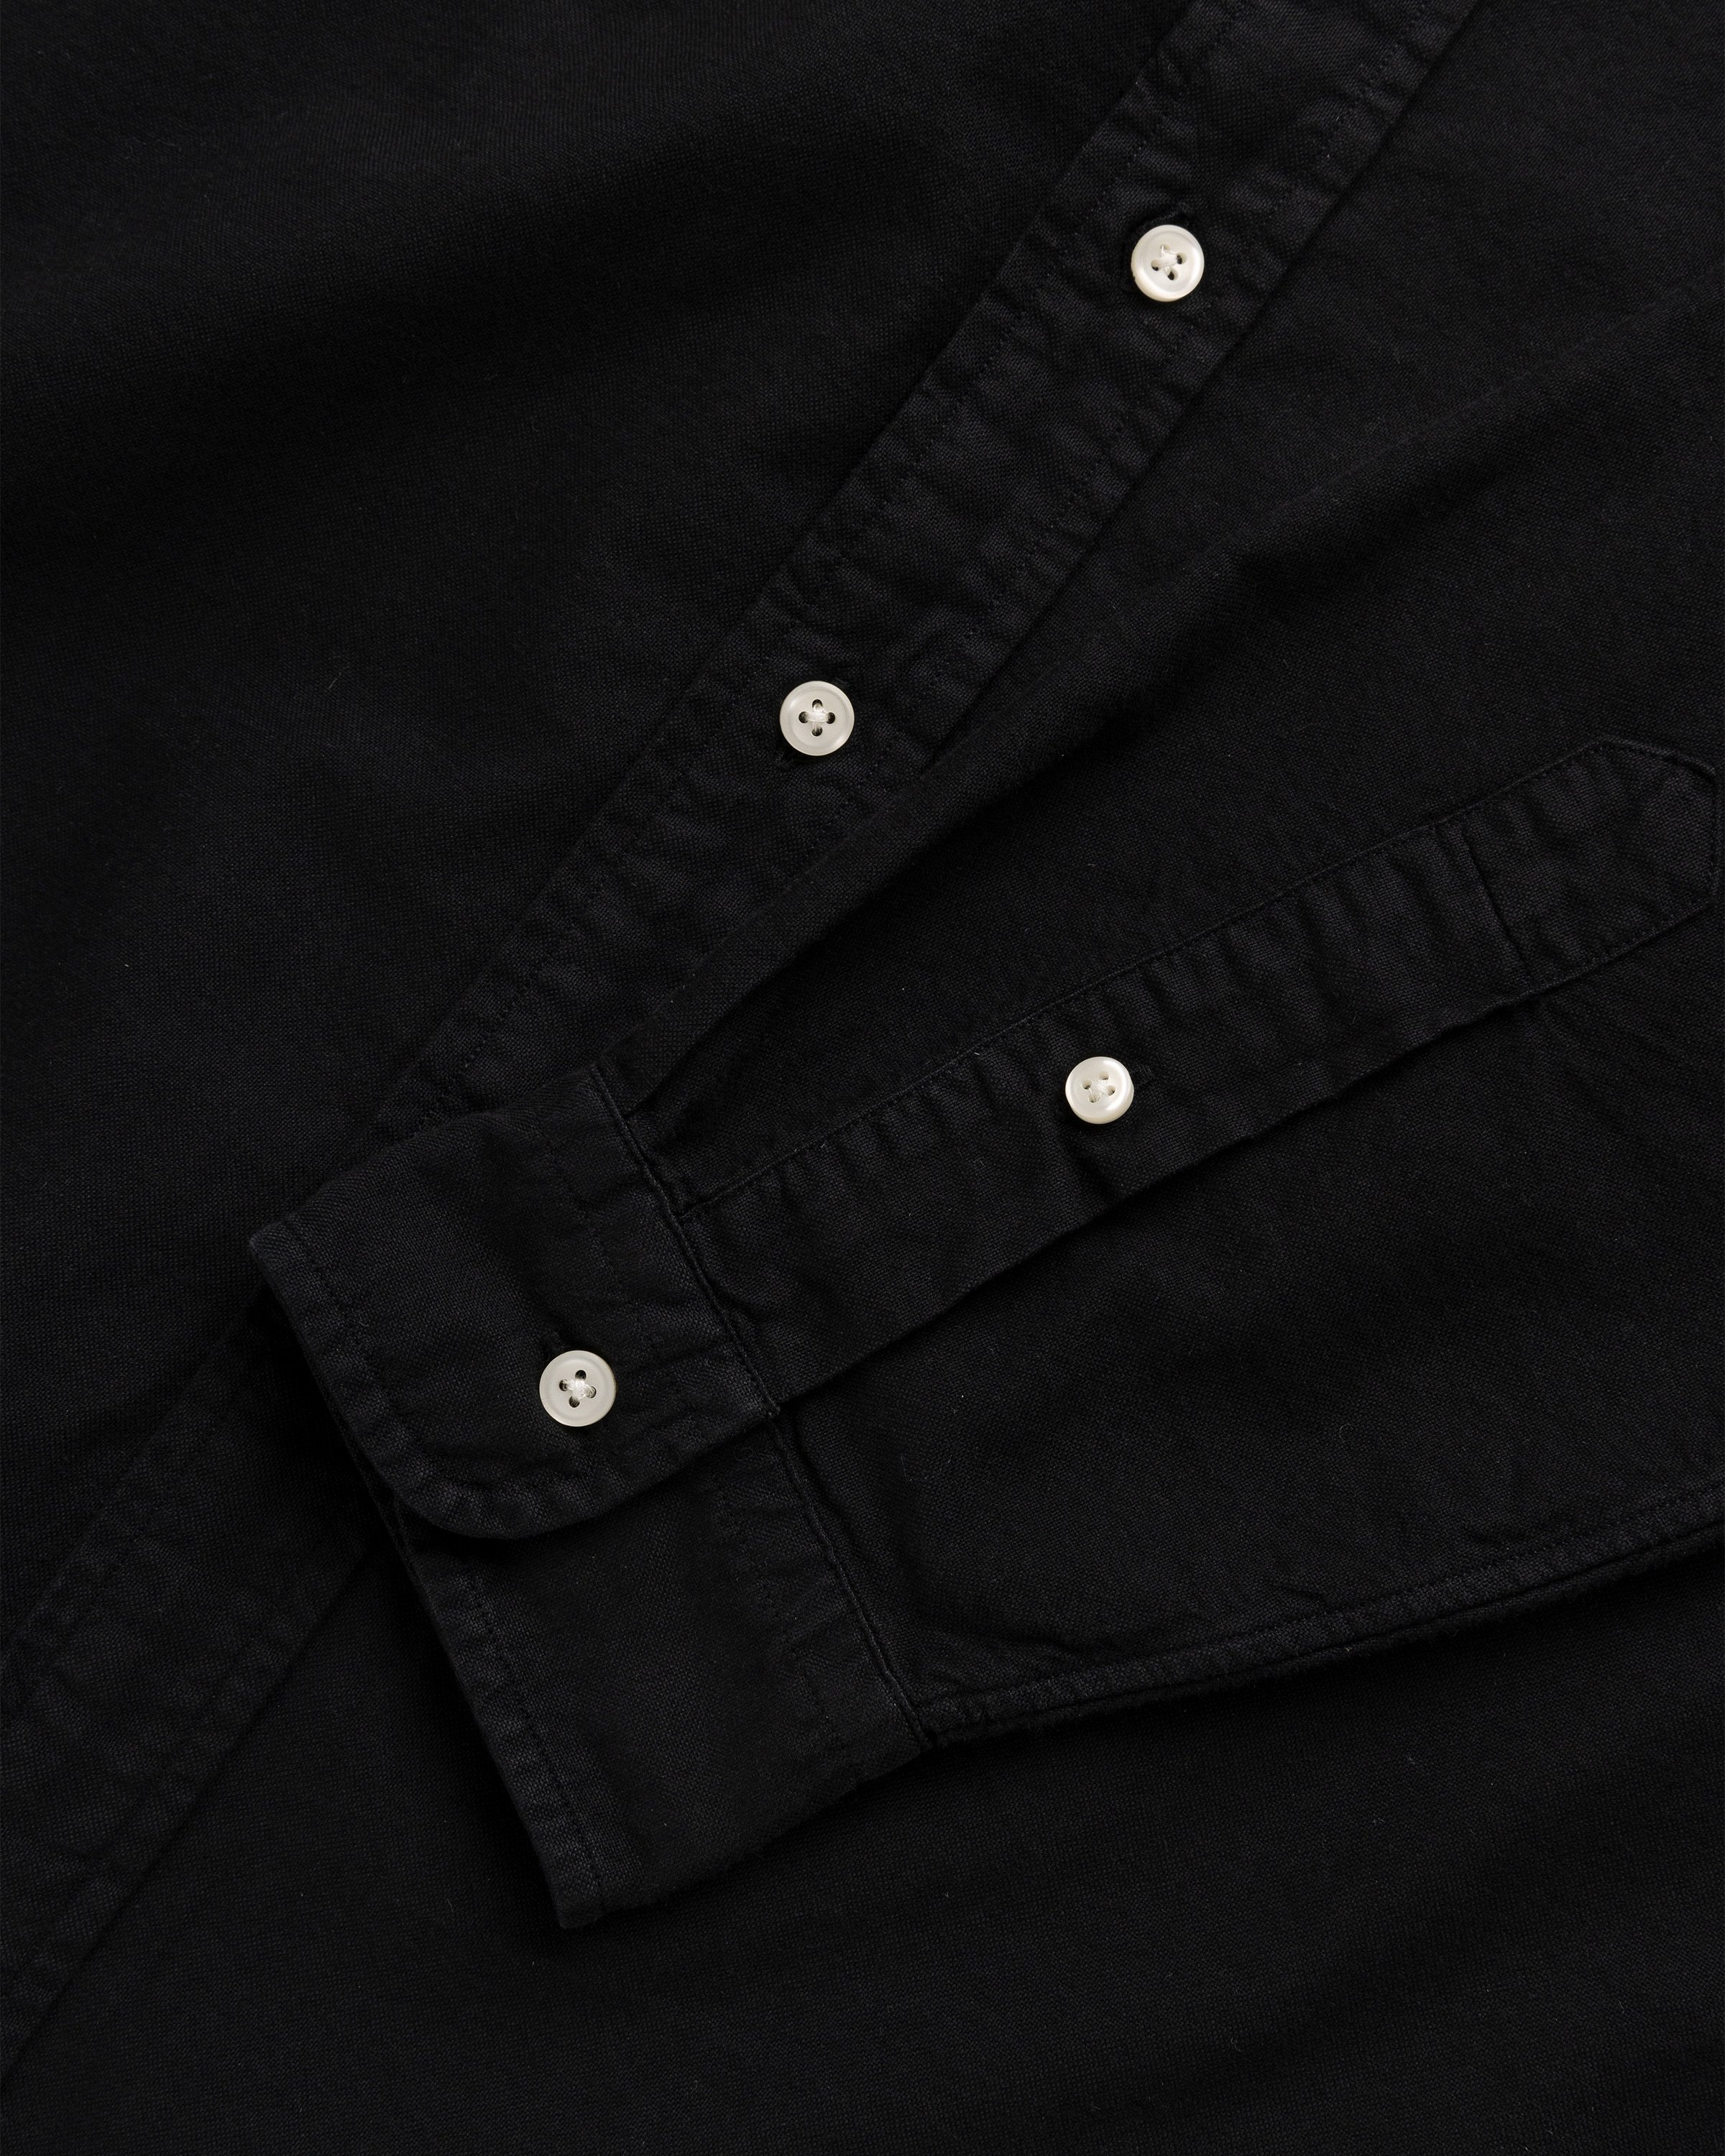 Ralph Lauren x Fortnite - Long Sleeve Sport Shirt Black - Clothing - Black - Image 5